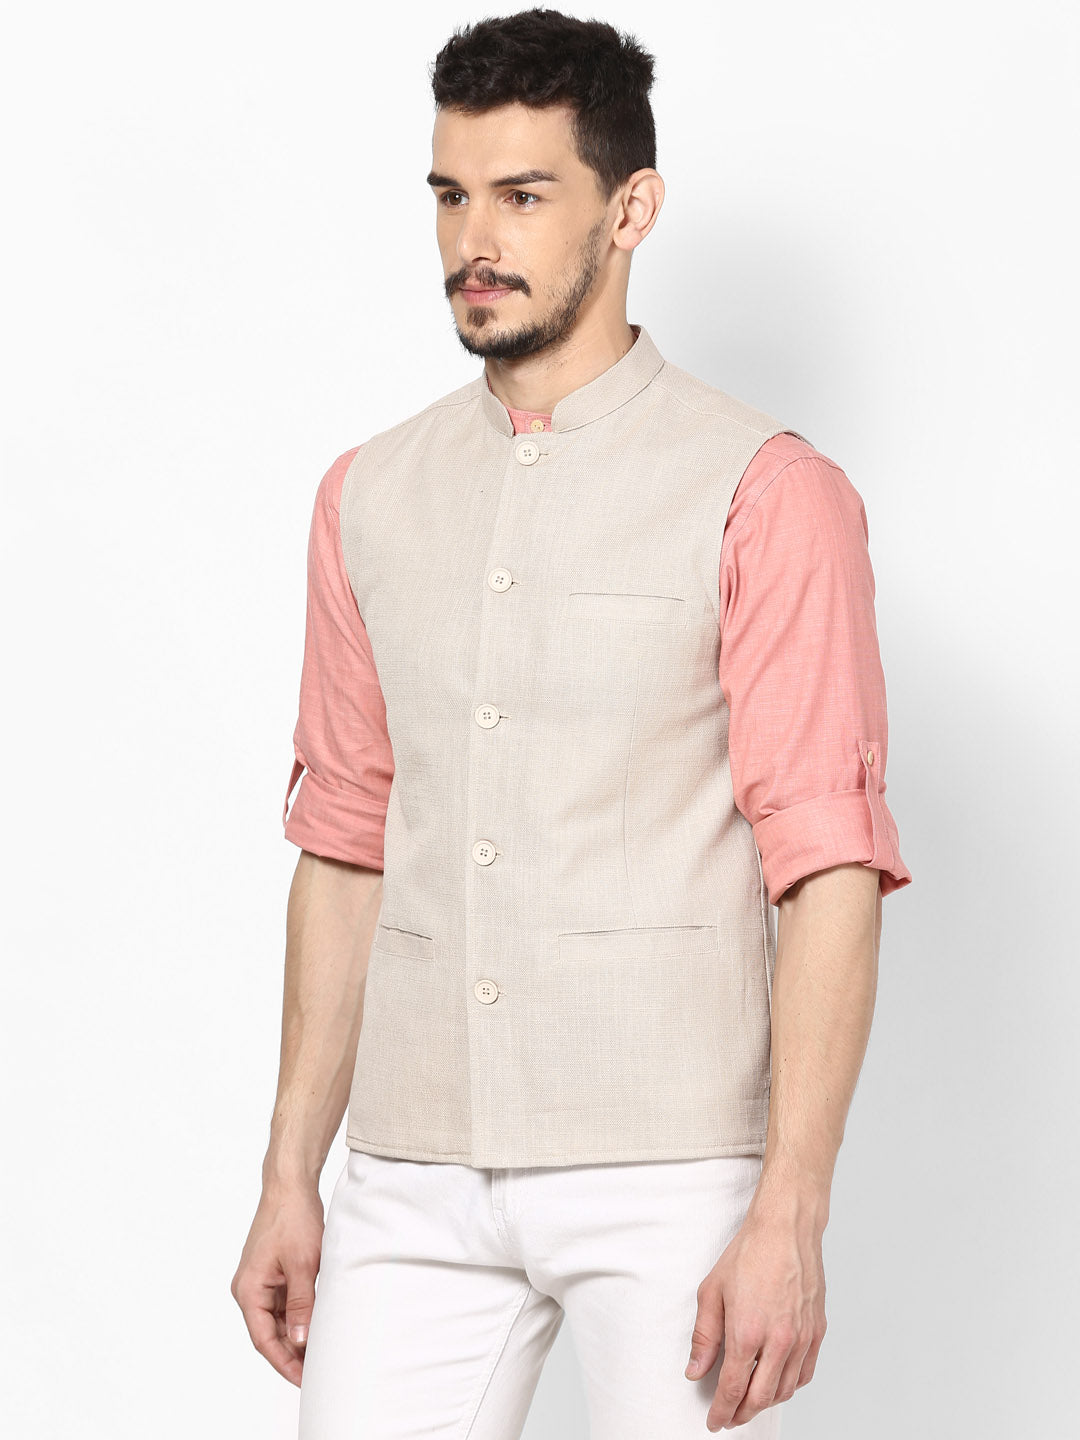 Men's Off White Linen Nehru Jacket - Even Apparels